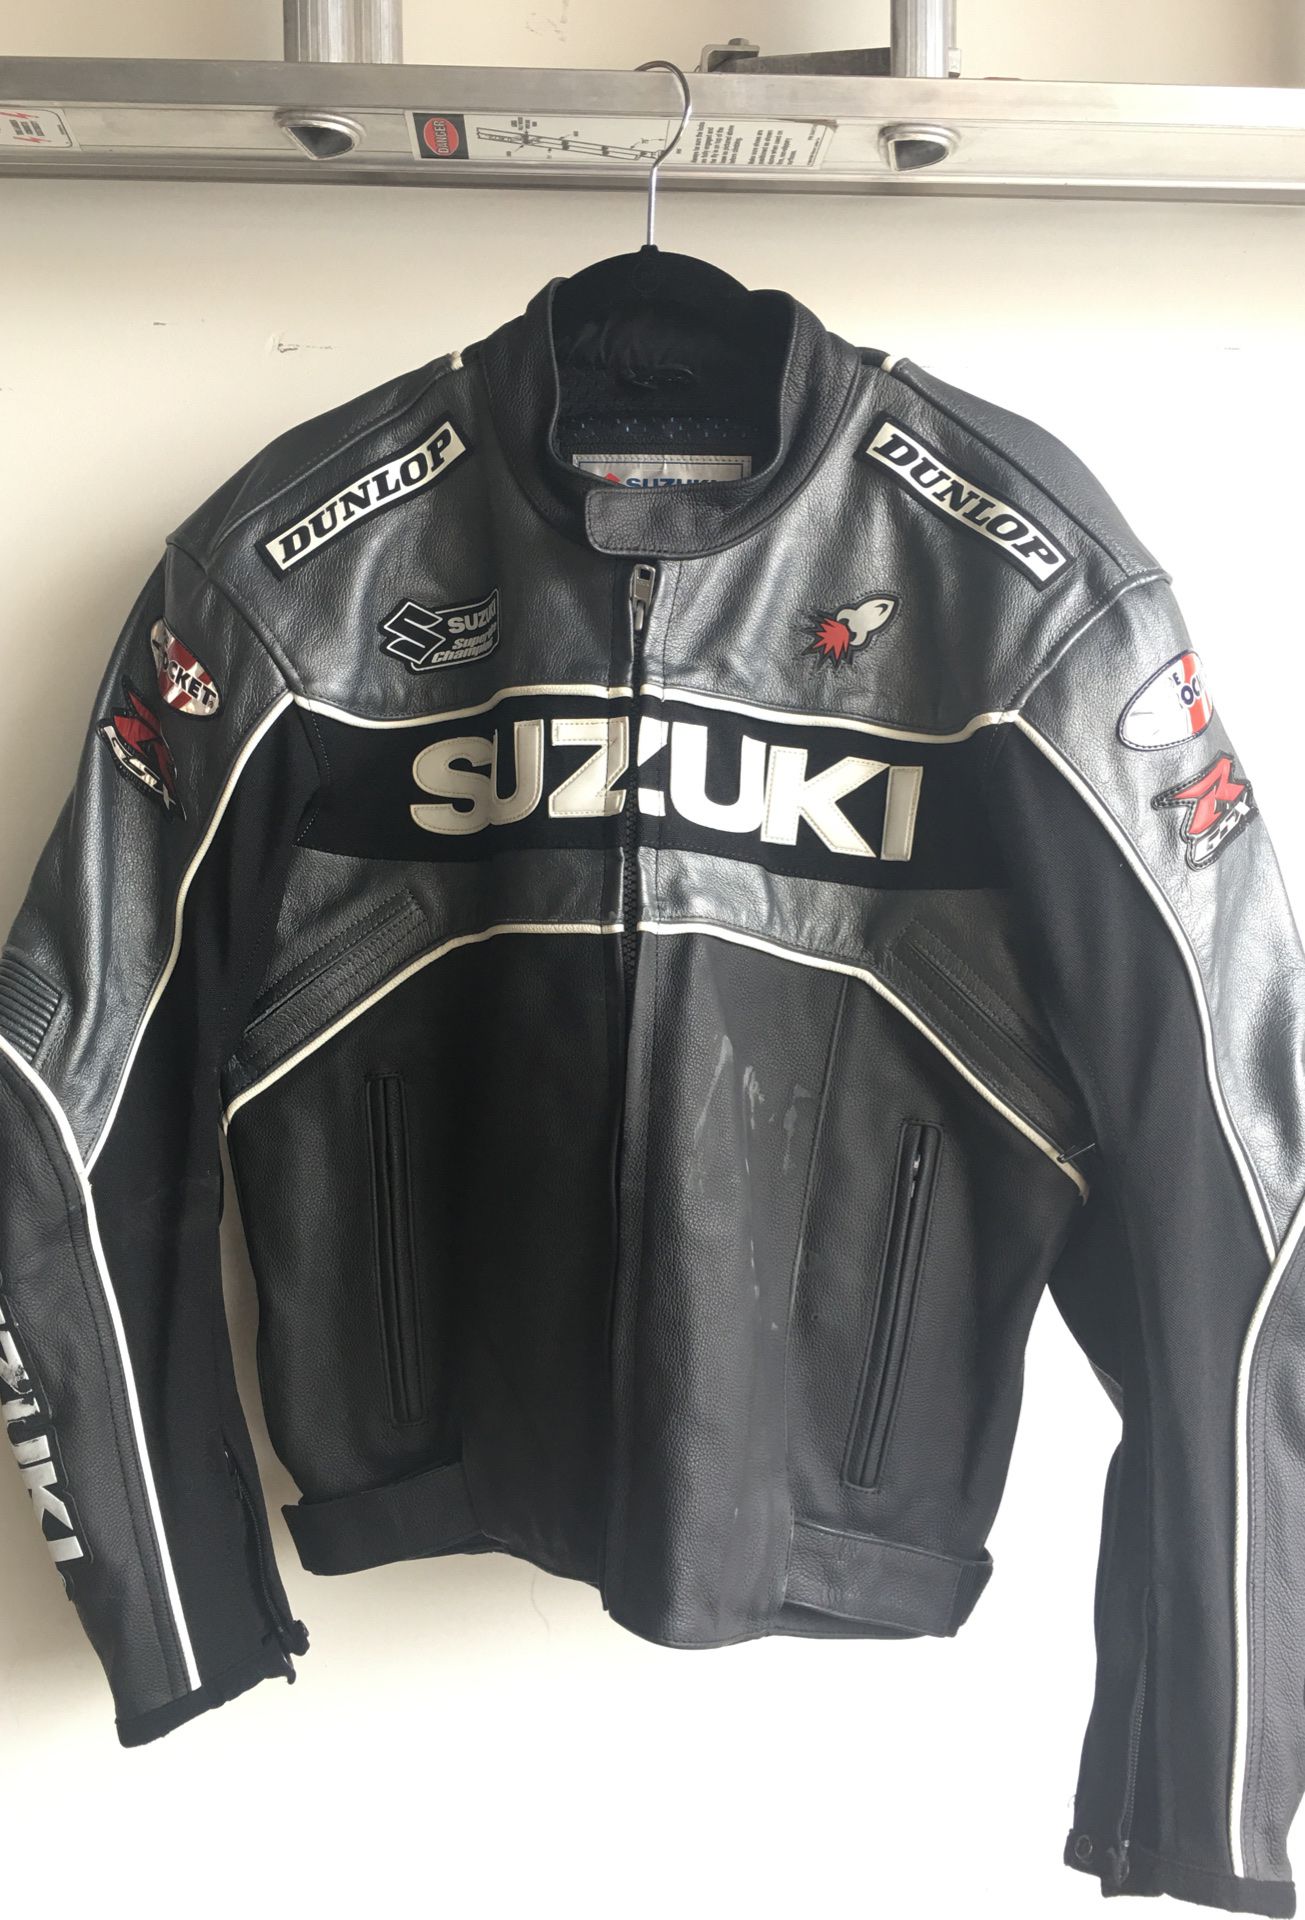 Joe Rocket Suzuki GSXR motorcycle jacket